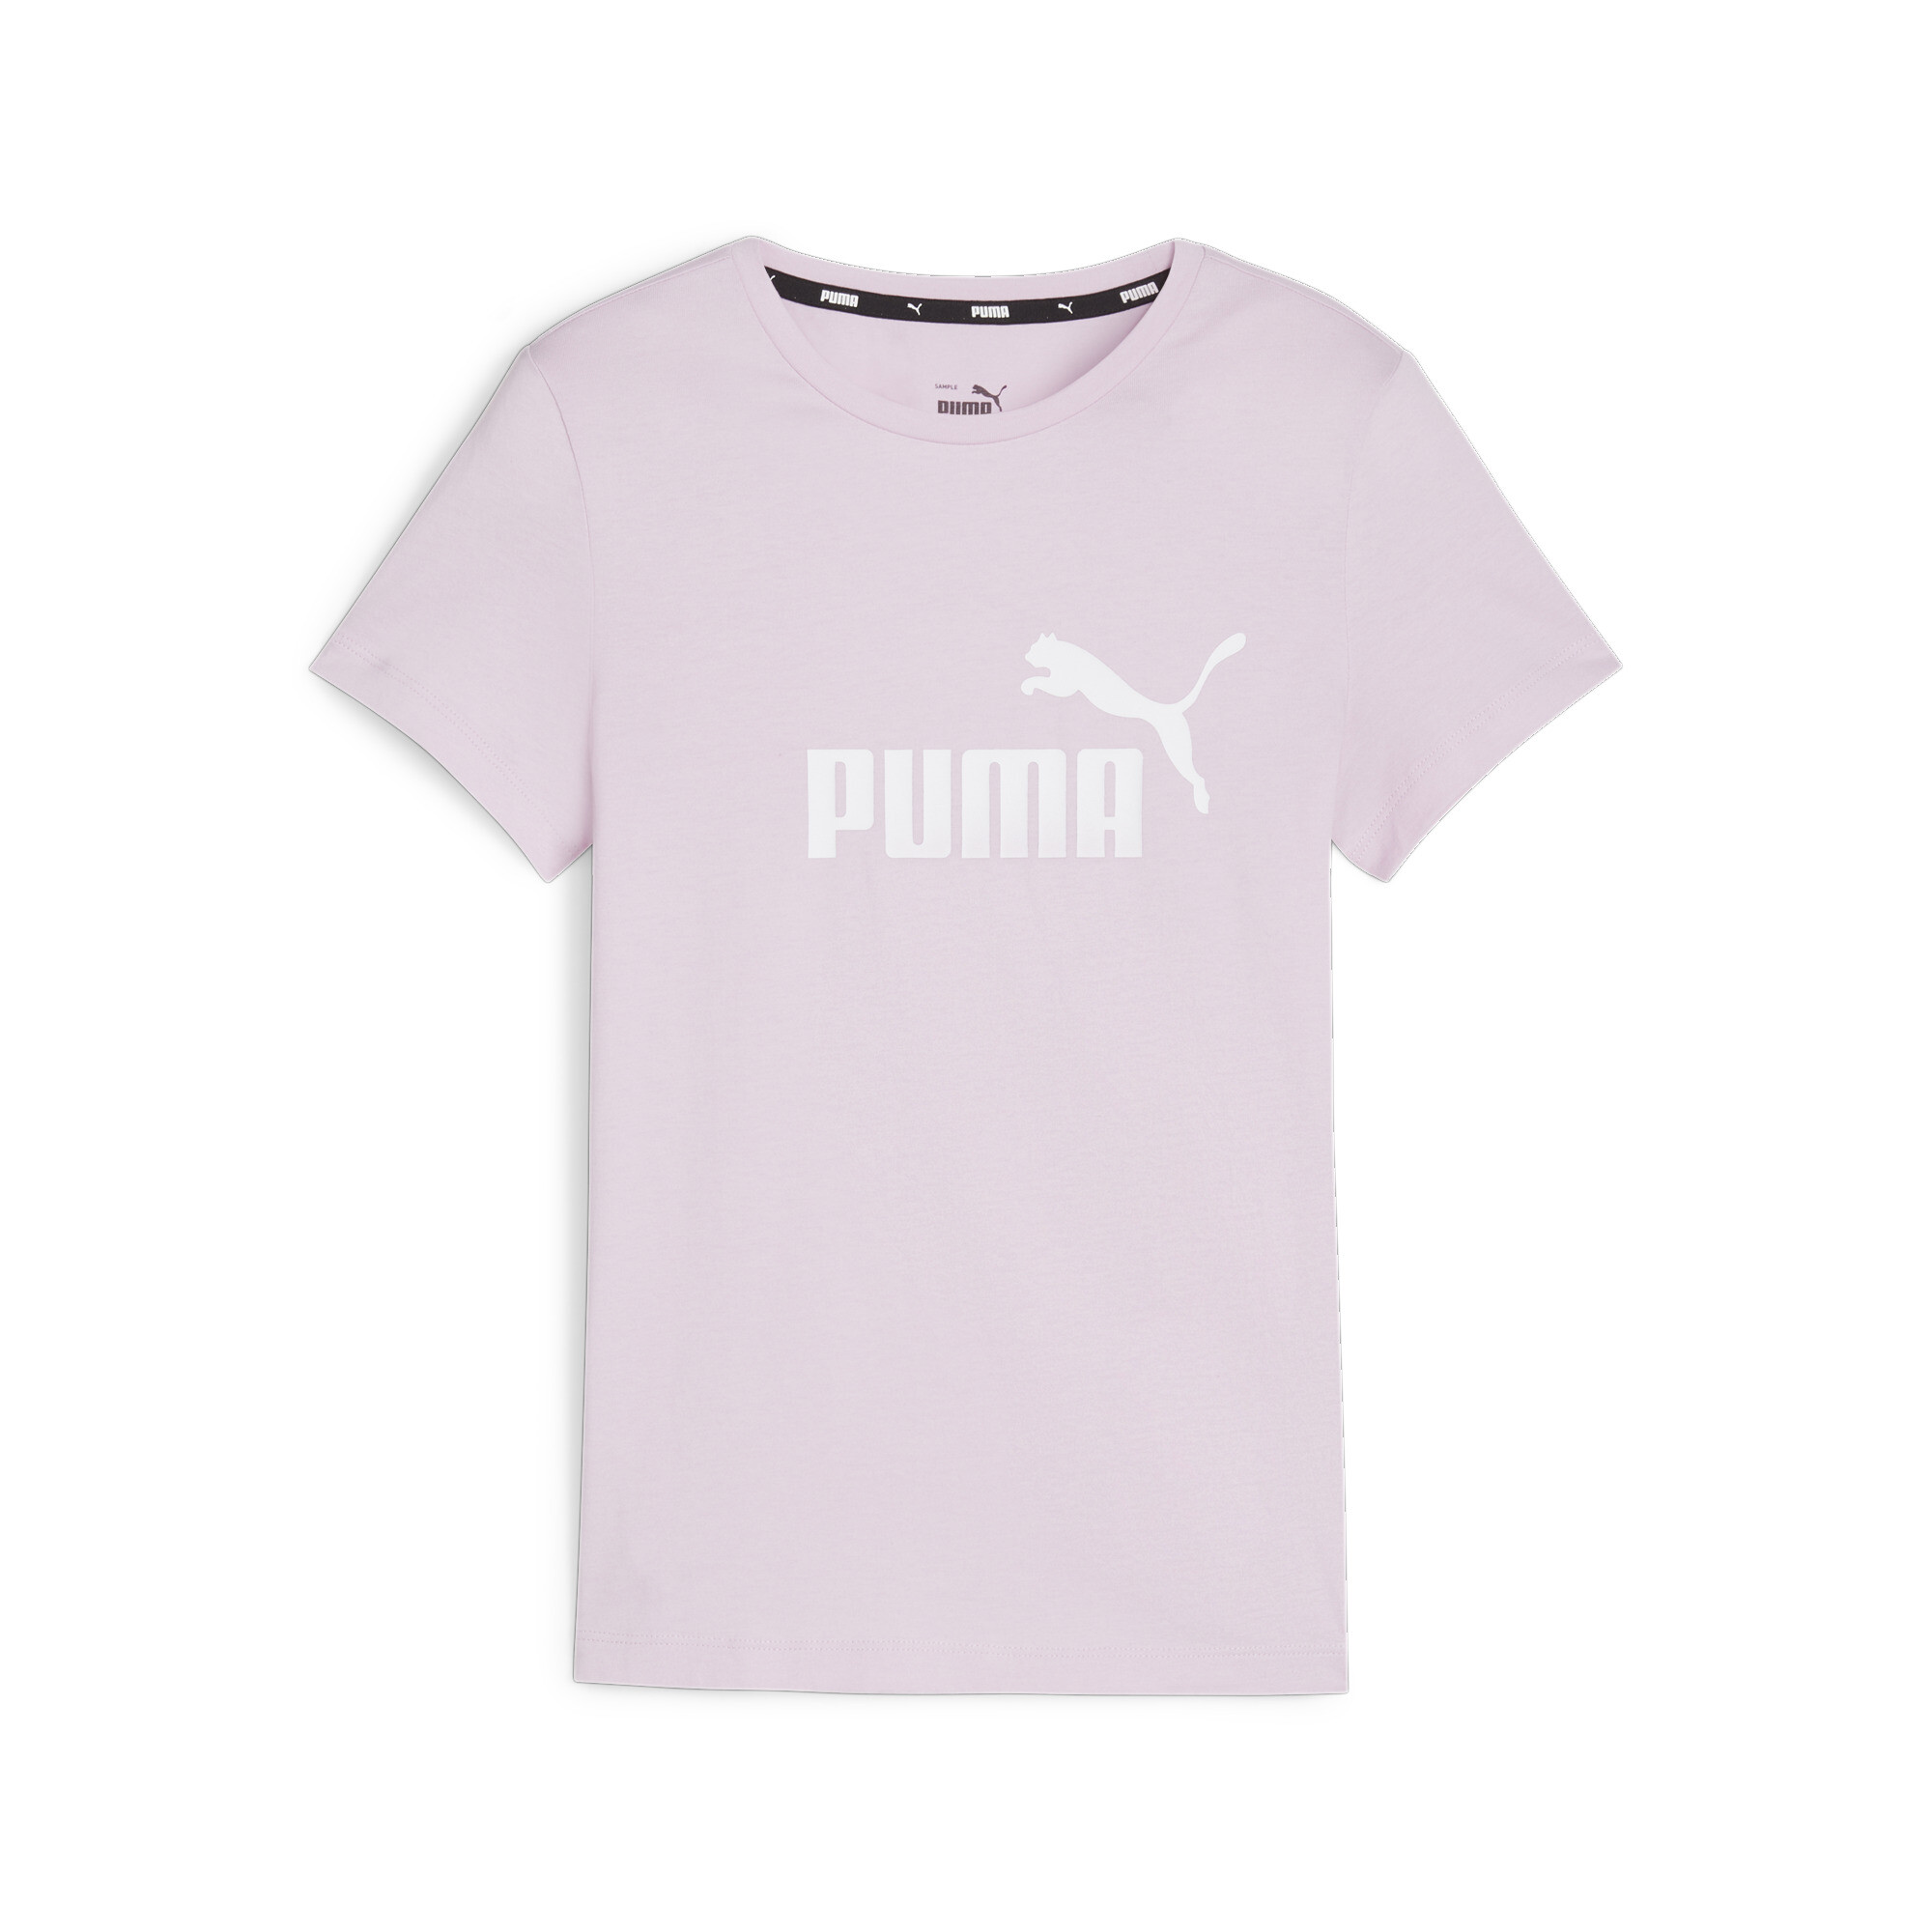 PUMA Essentials Logo T-Shirt In Purple, Size 7-8 Youth